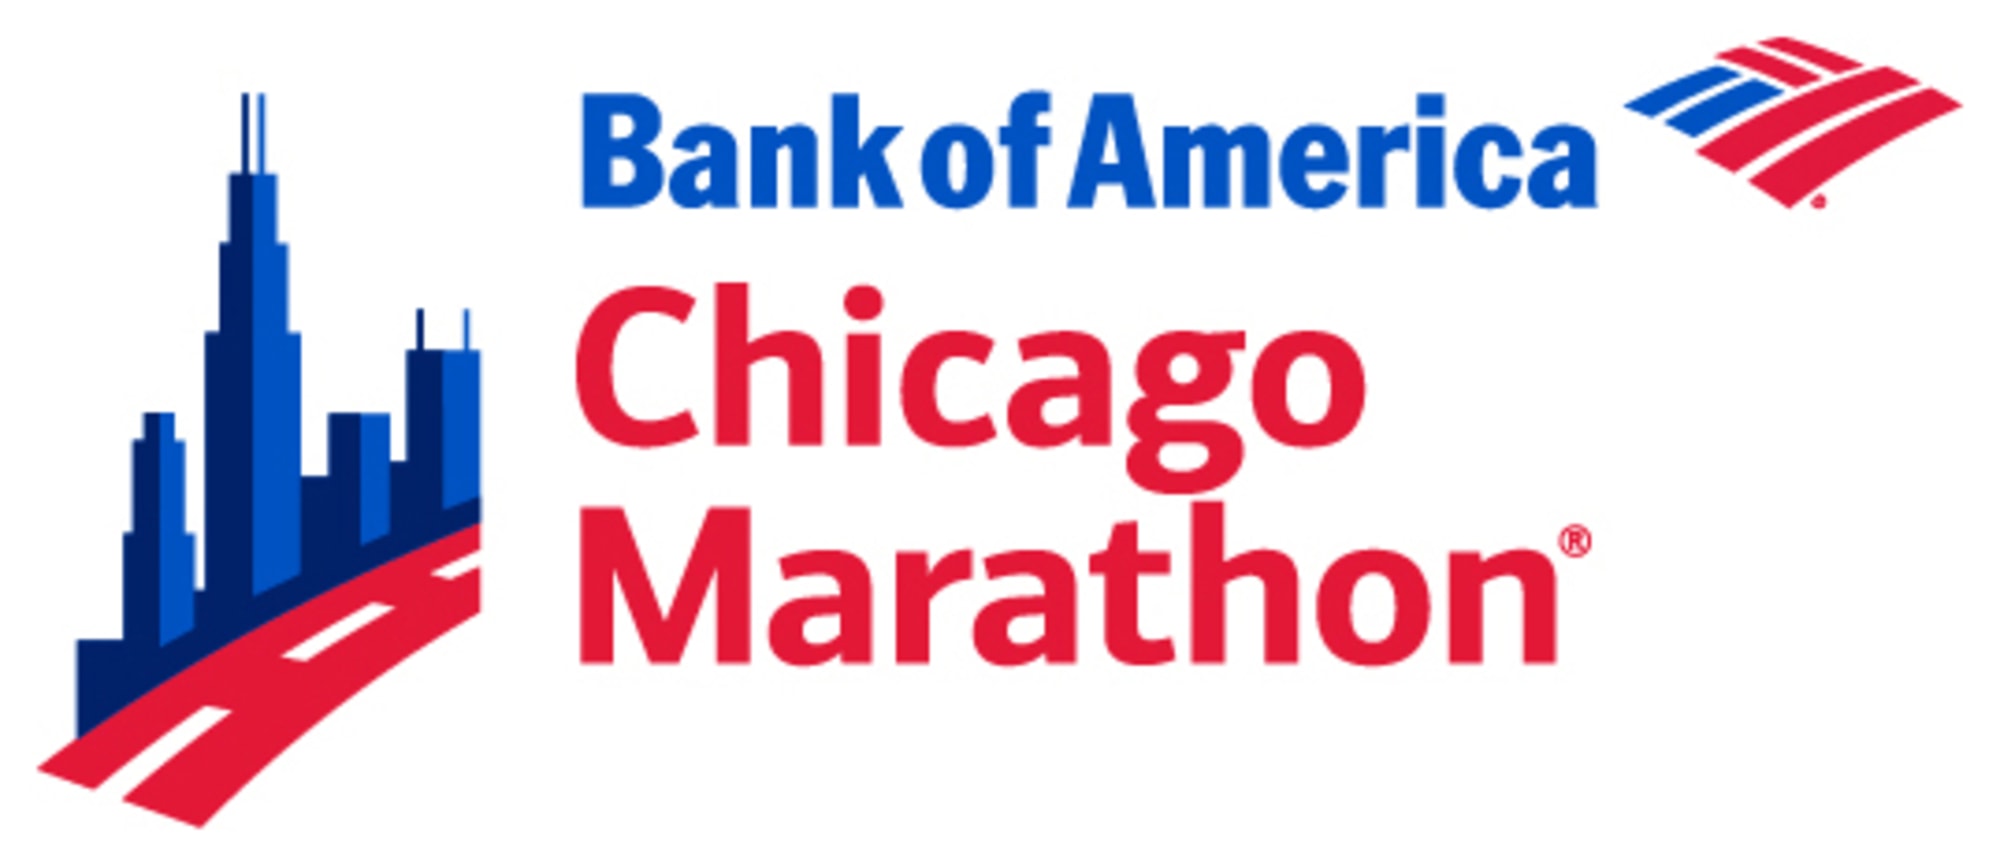 List of Chicago Marathon winners